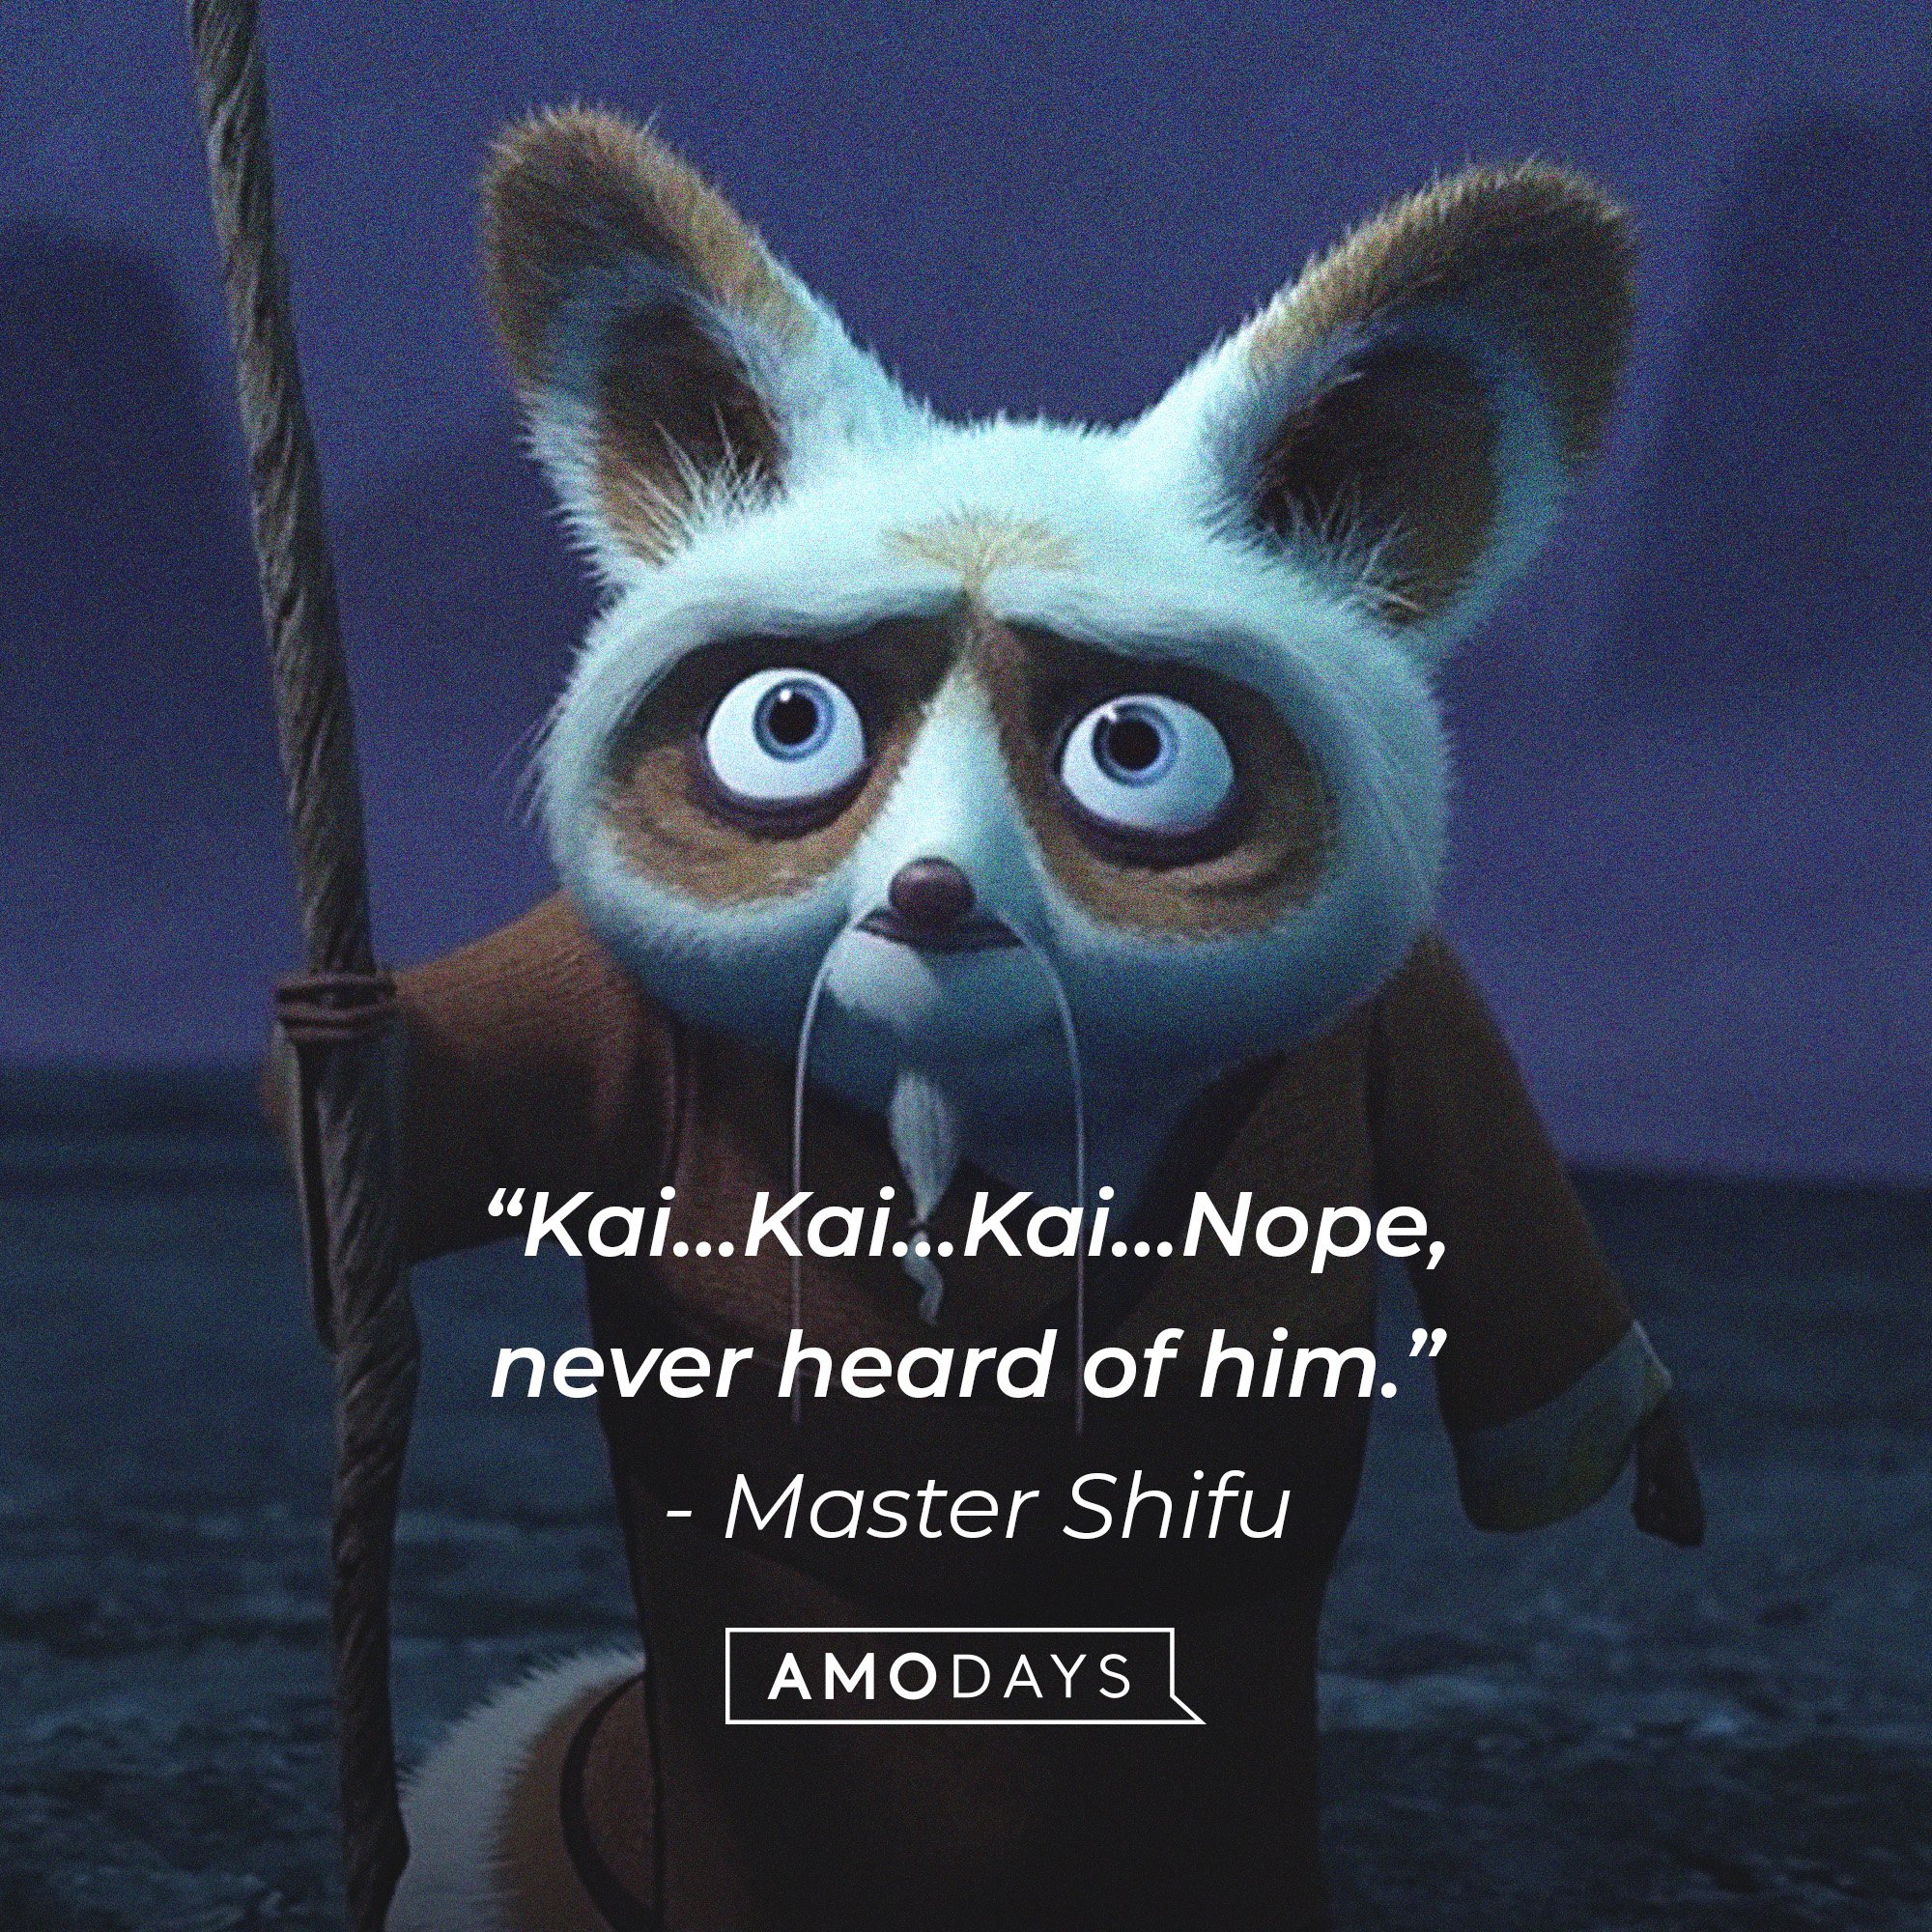  Master Shifu’s quote: “Kai…Kai…Kai…Nope, never heard of him.”  | Image: AmoDays